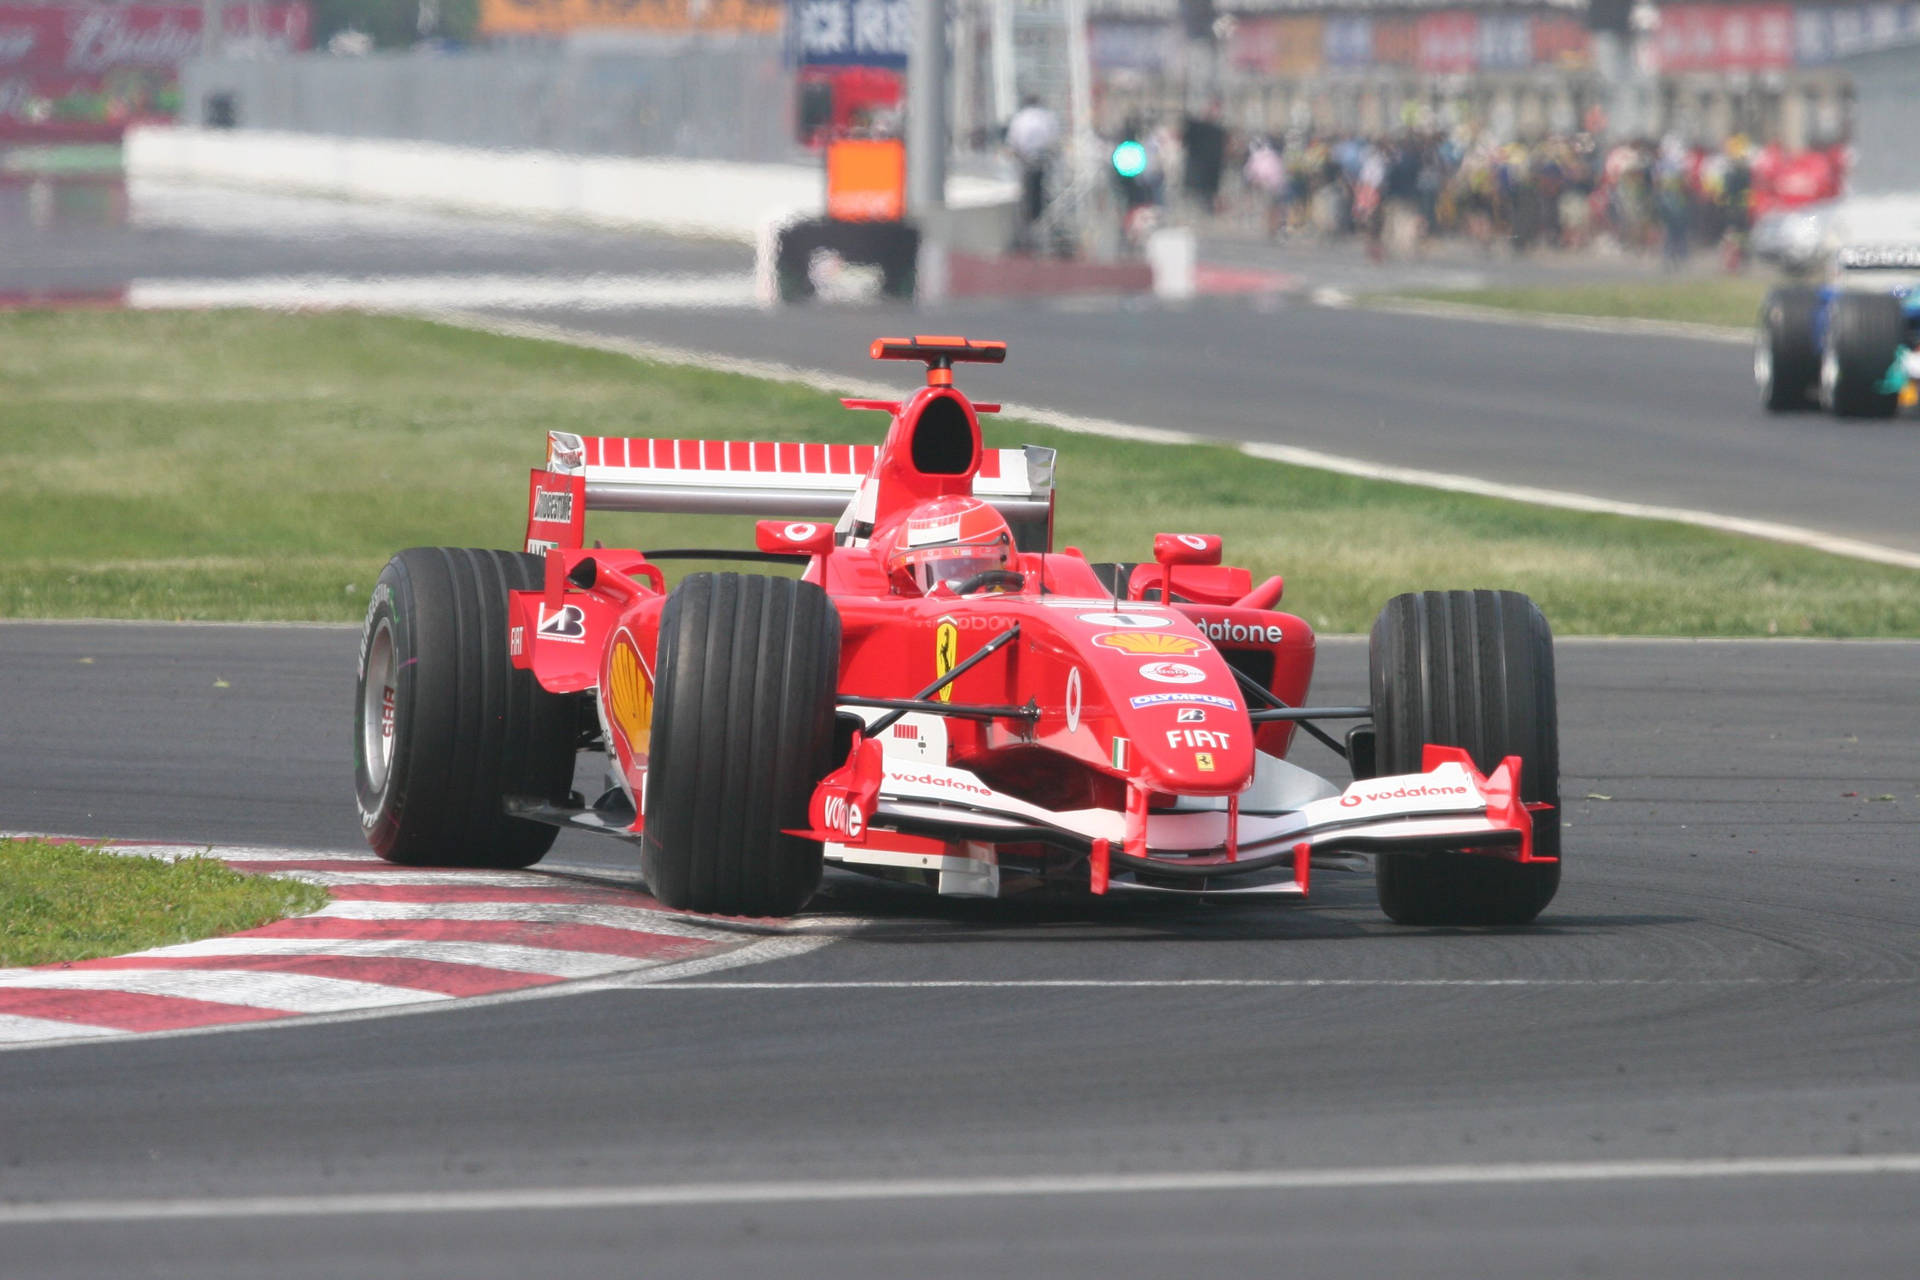 Cool Racing Legend Michael Schumacher